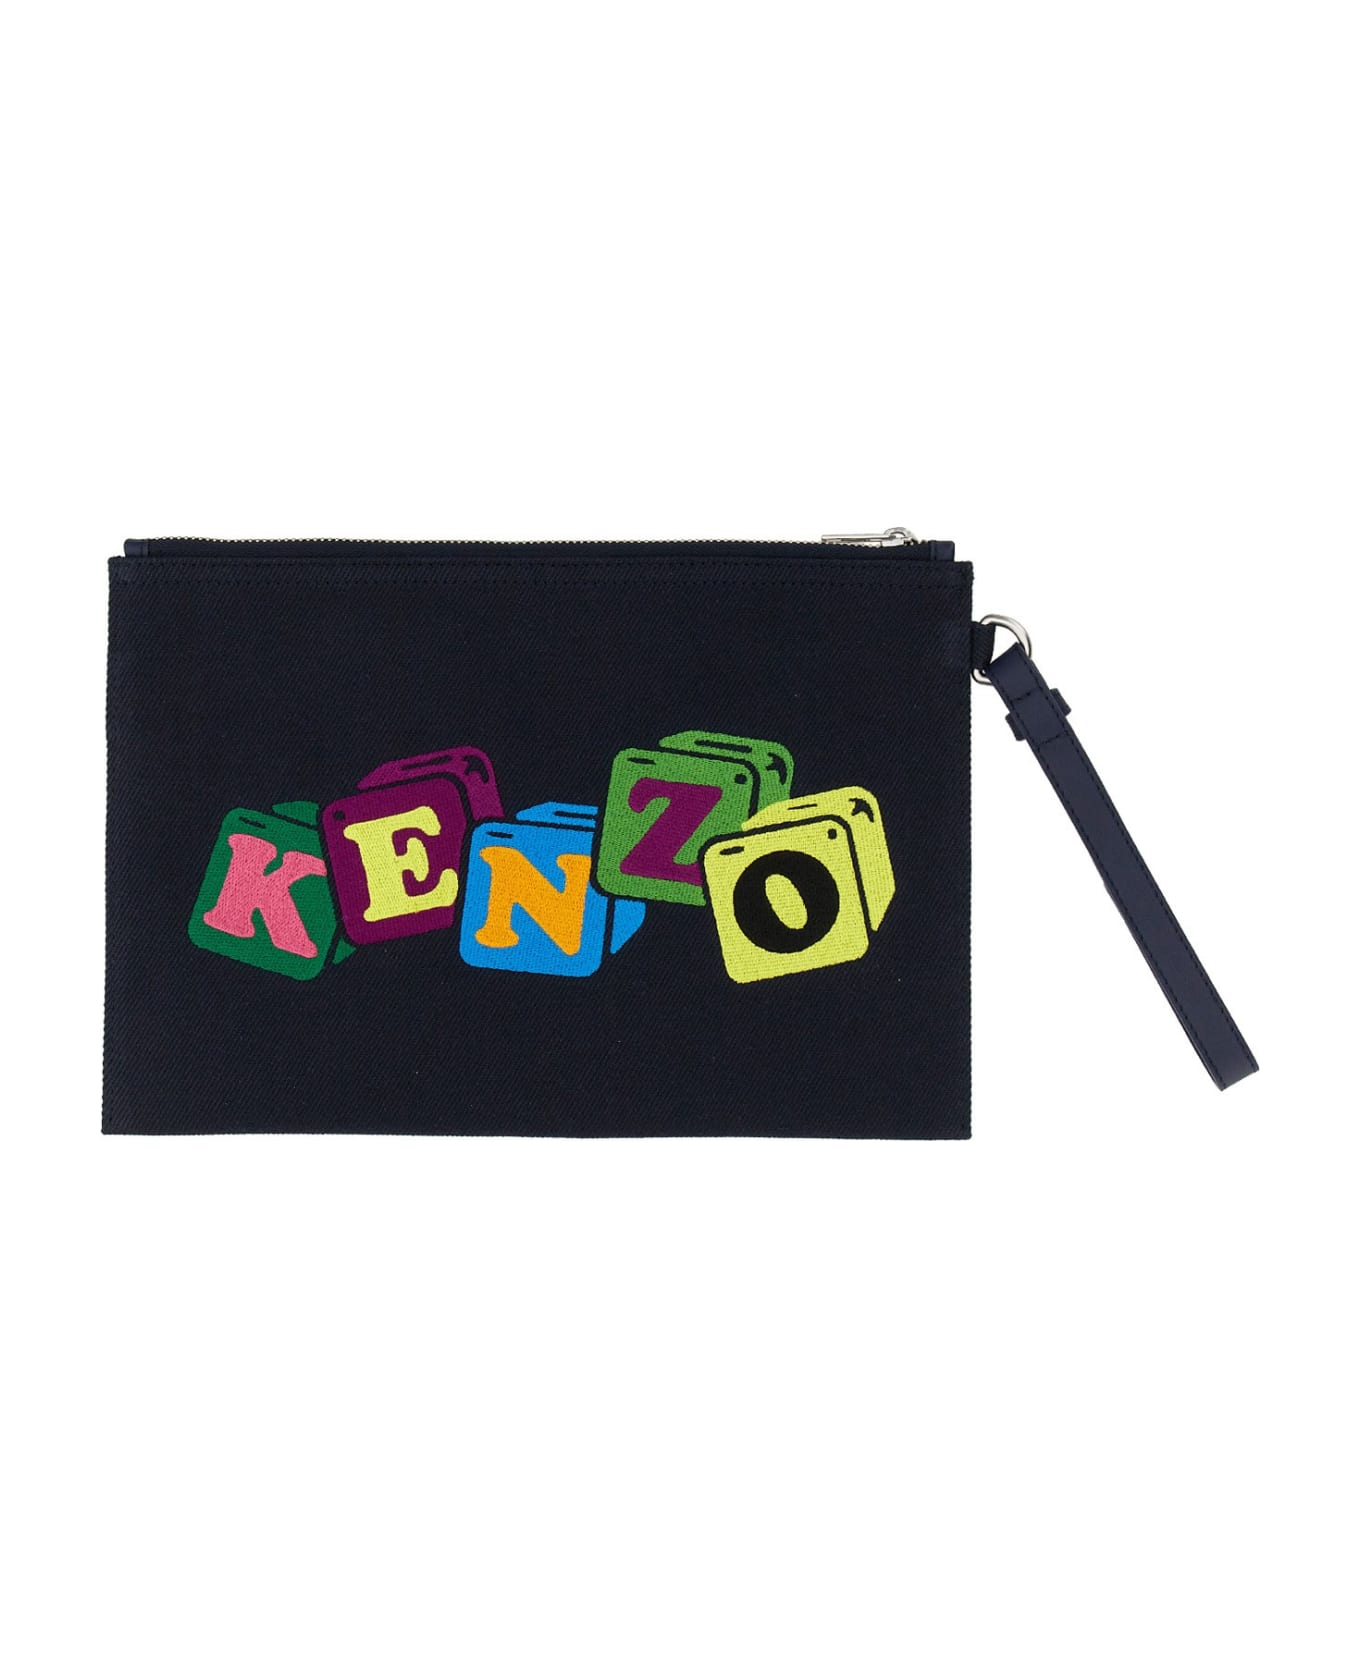 Kenzo Clutch With Embroidery - BLU